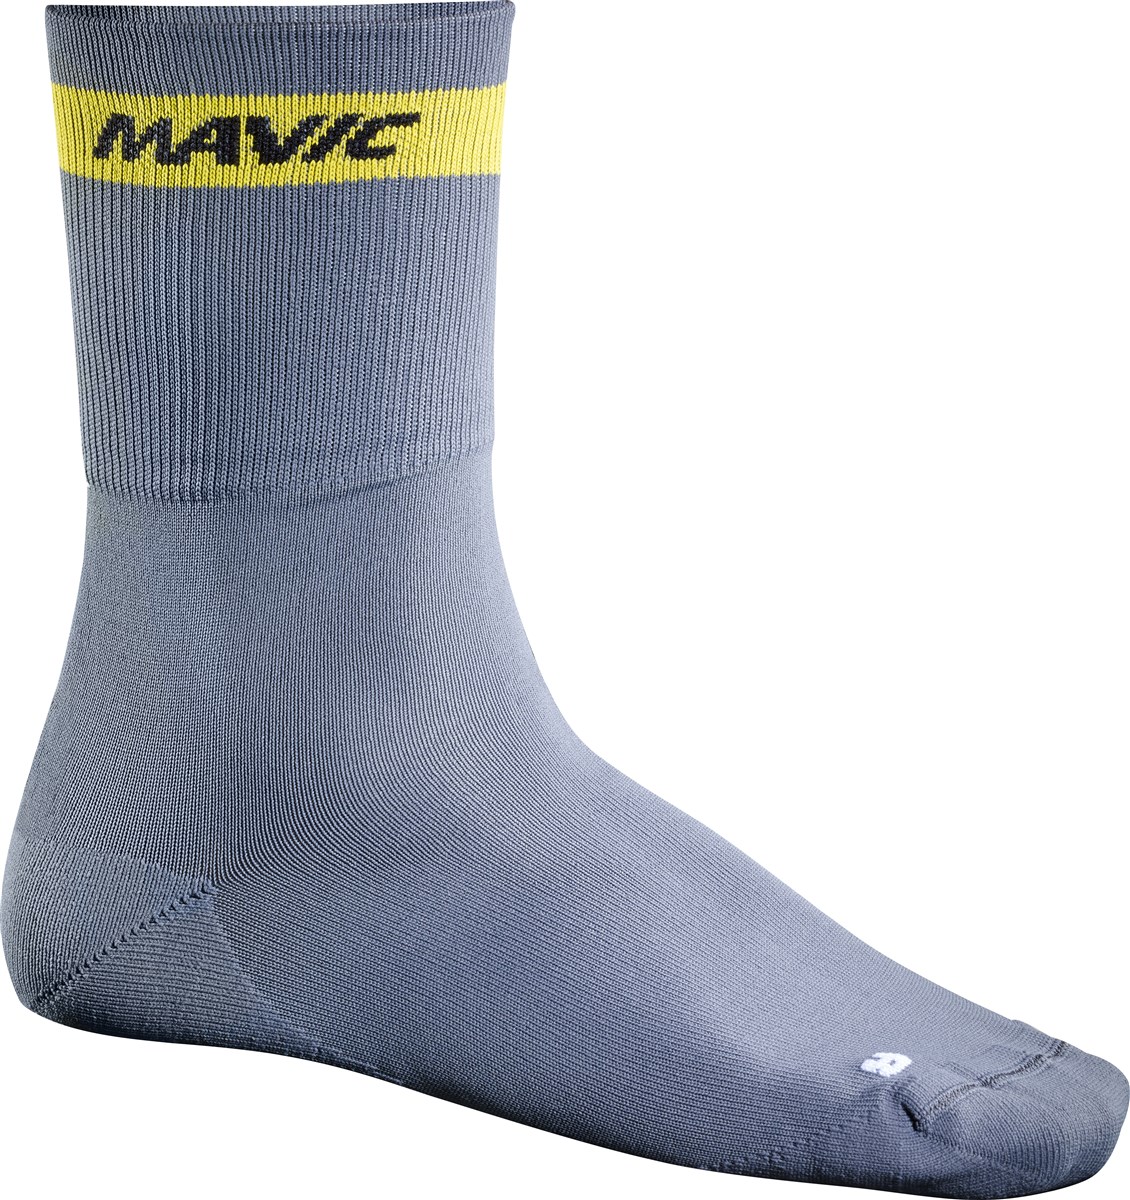 Mavic Crossmax High Cycling Socks SS17 product image